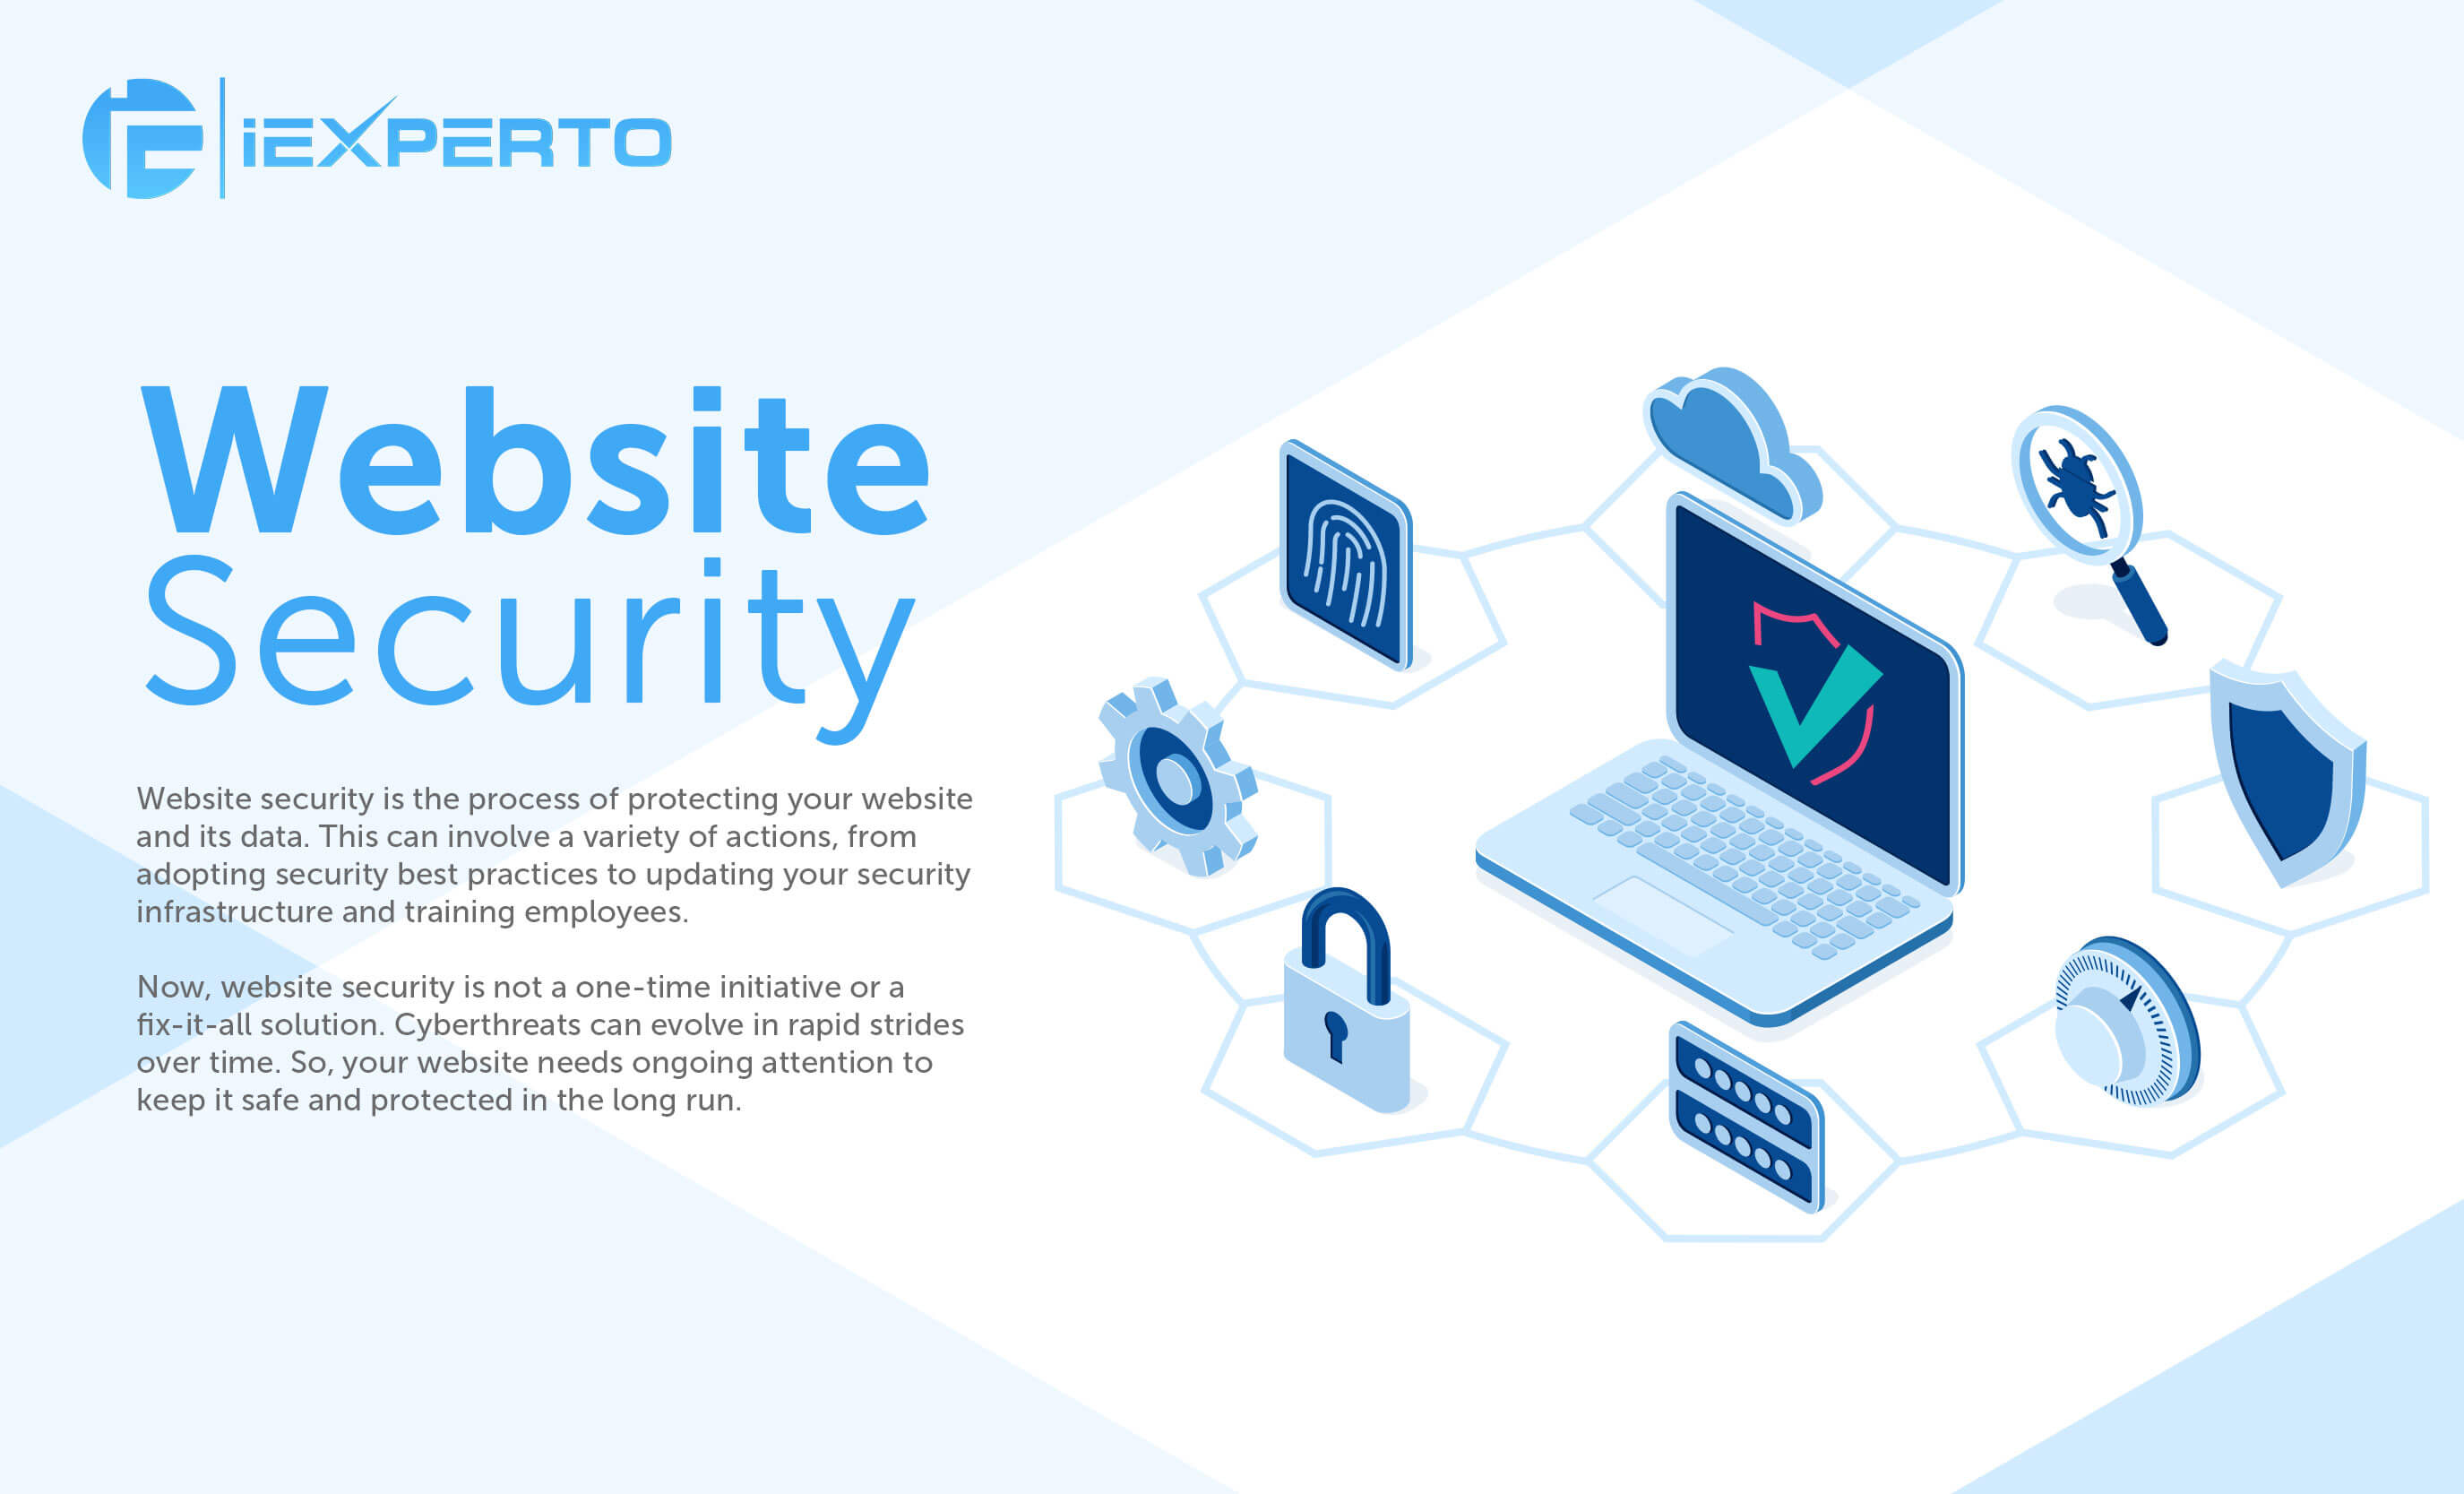 Website Security Services